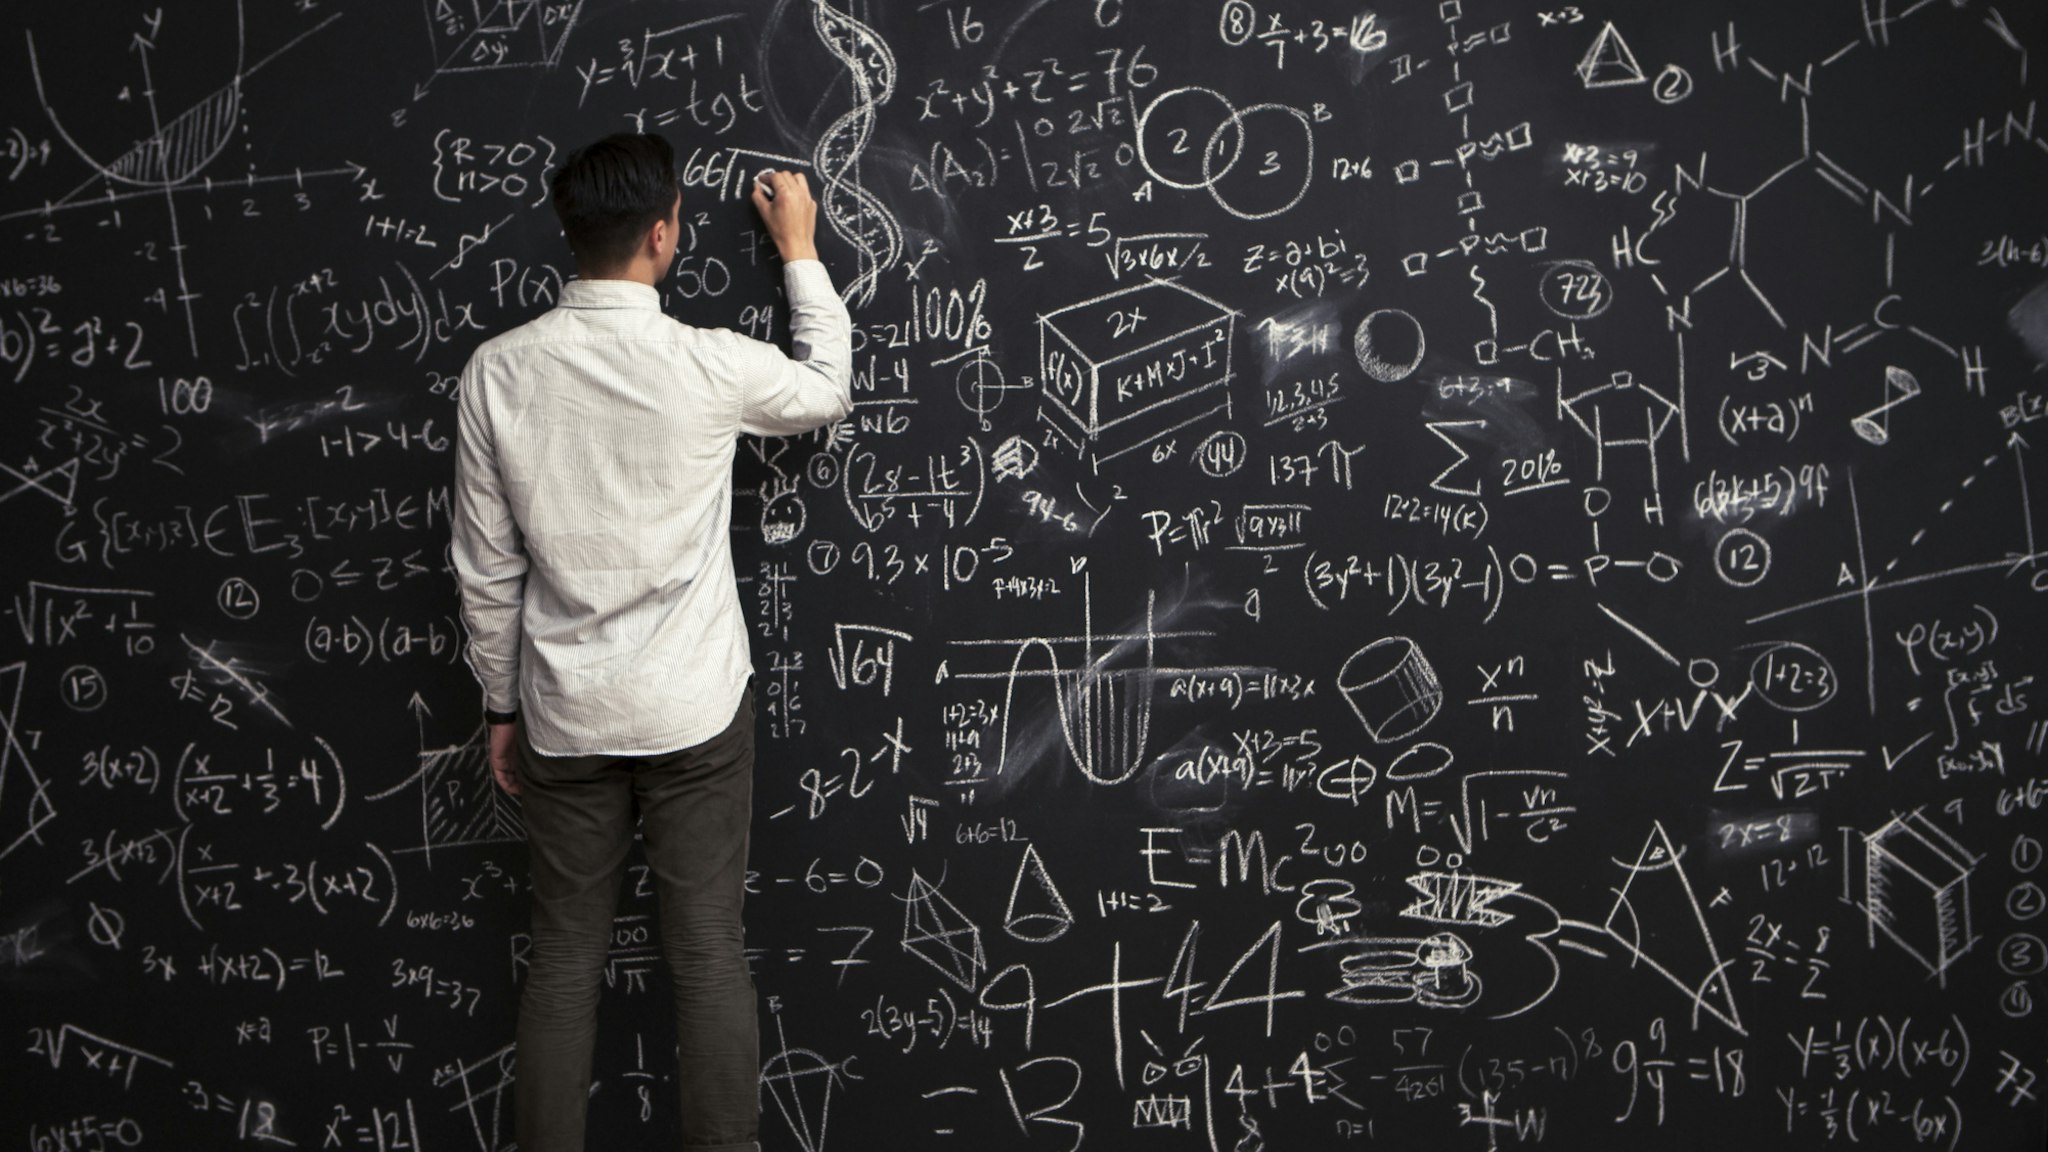 Man writes mathematical equations on chalkboard - stock photo